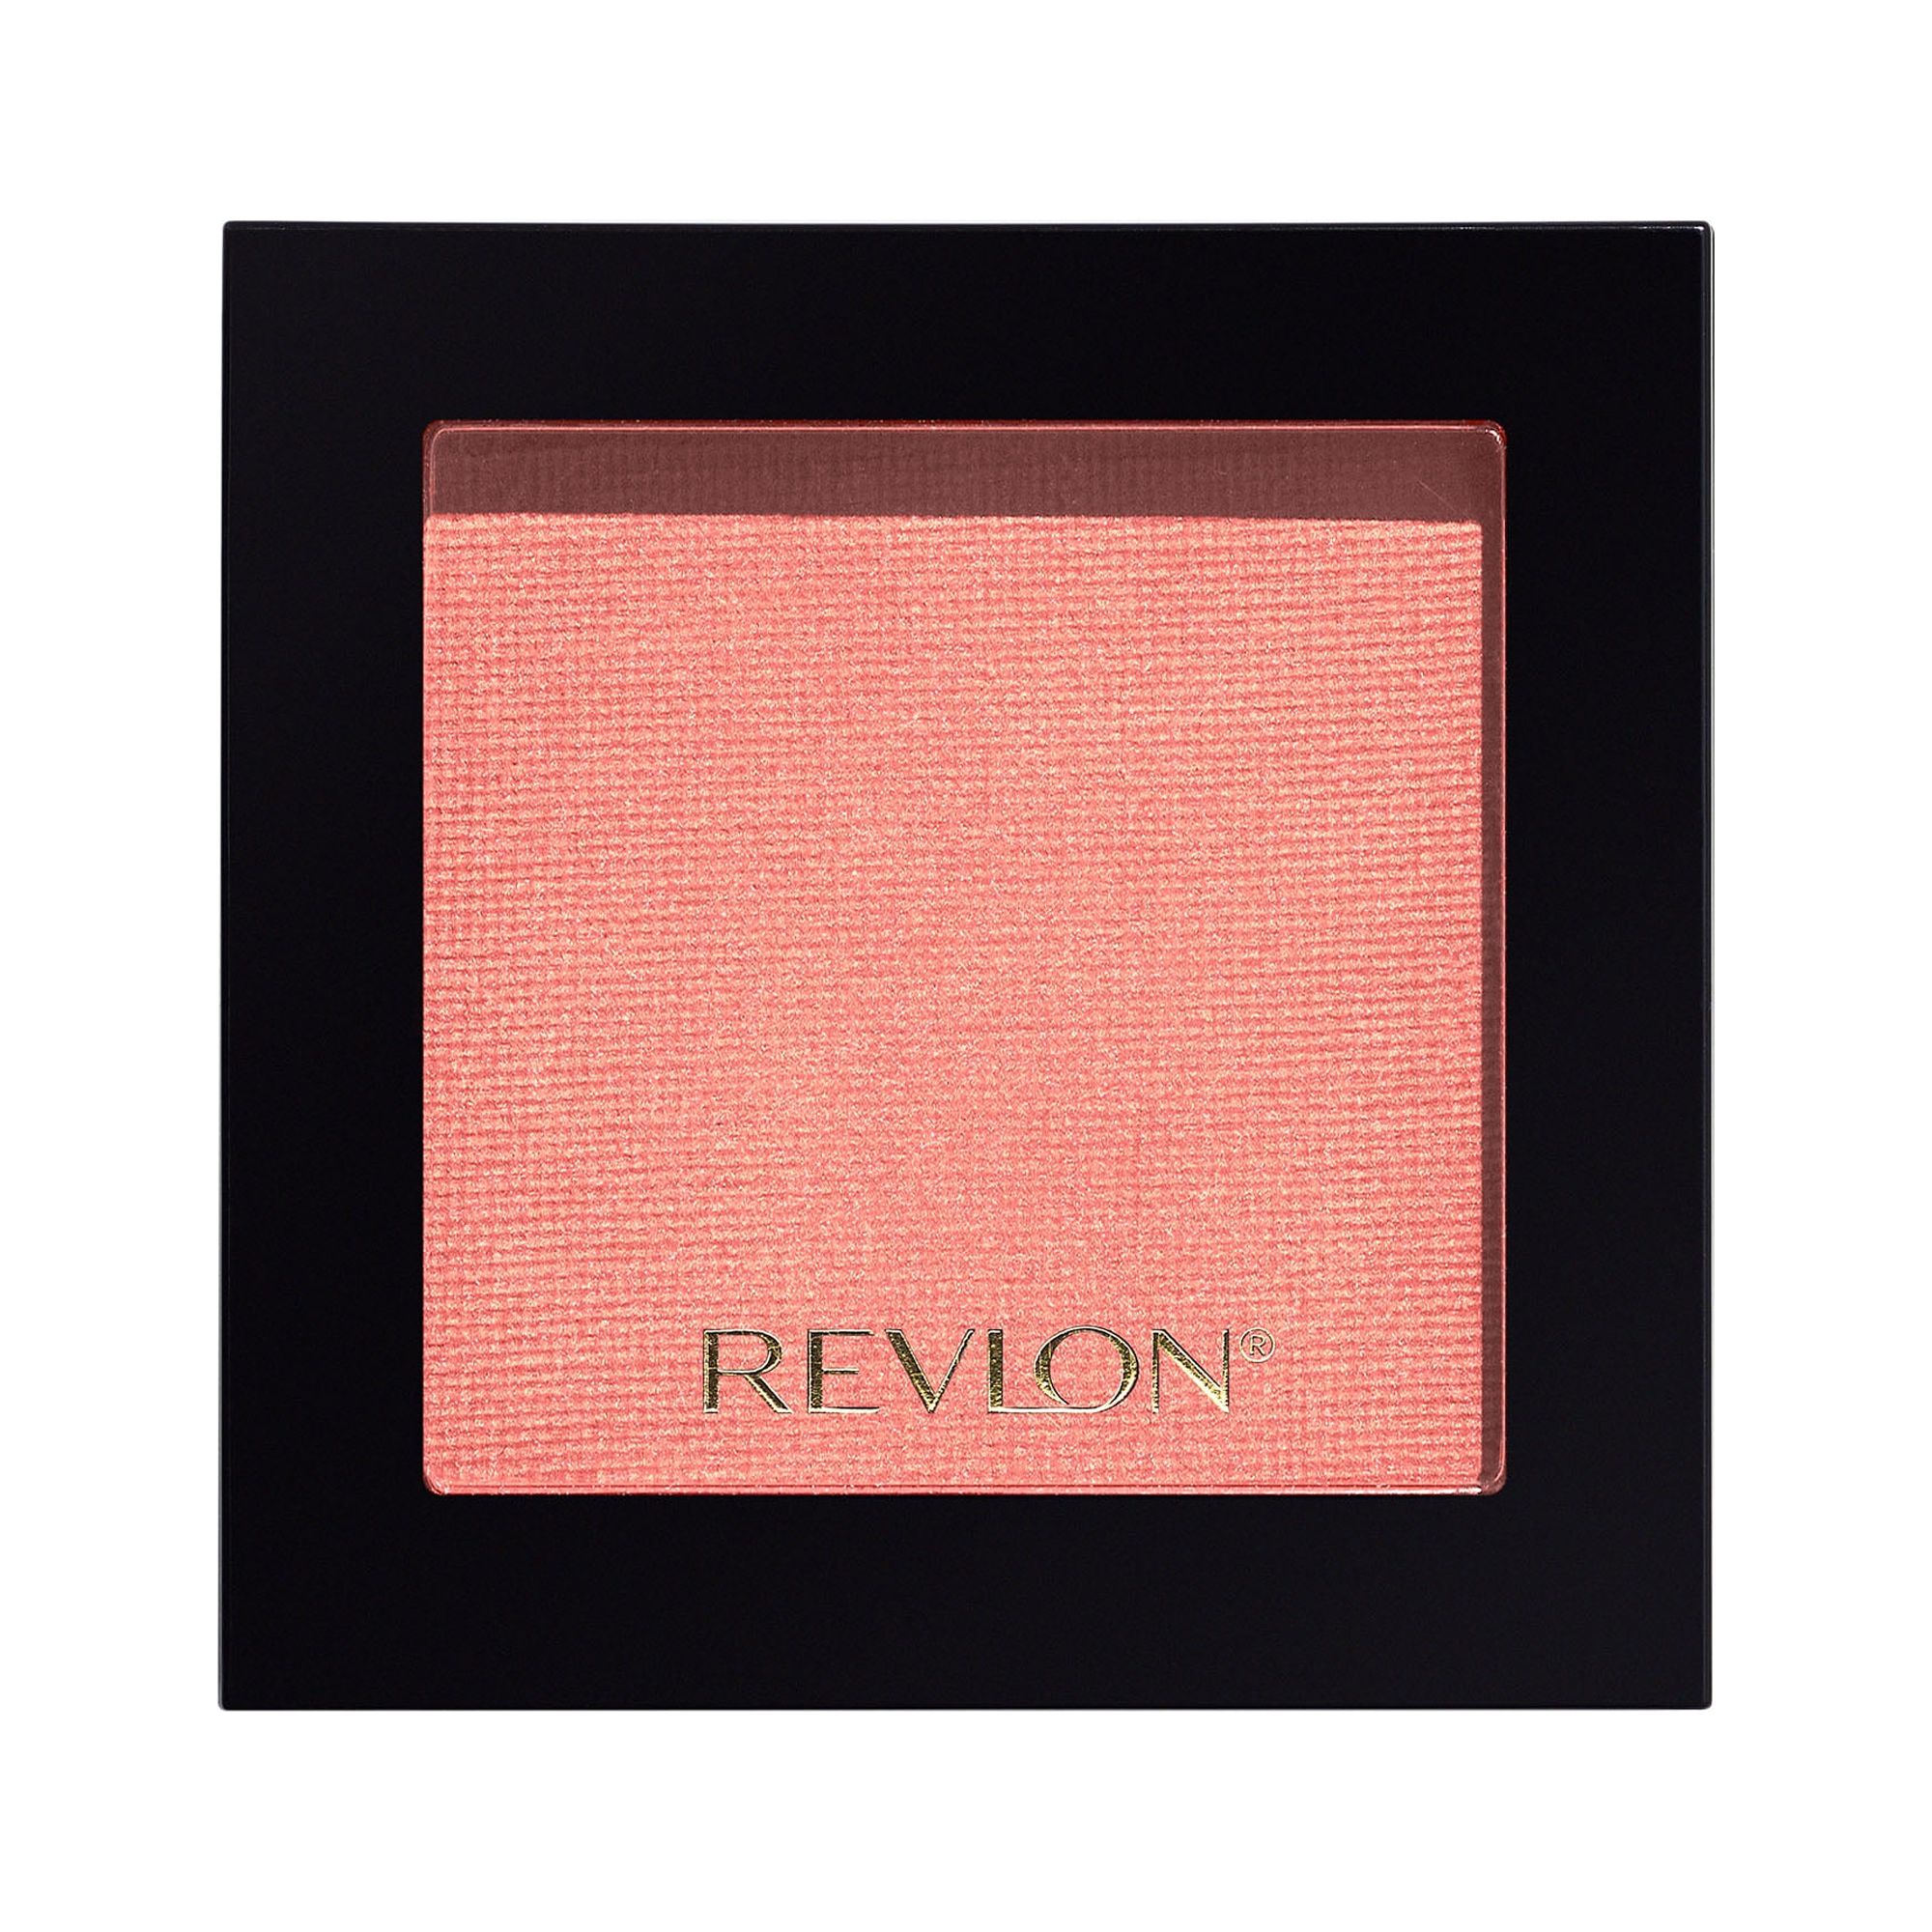 Revlon Powder Blush, 029 Rose Bomb, 0.18 oz - image 1 of 4